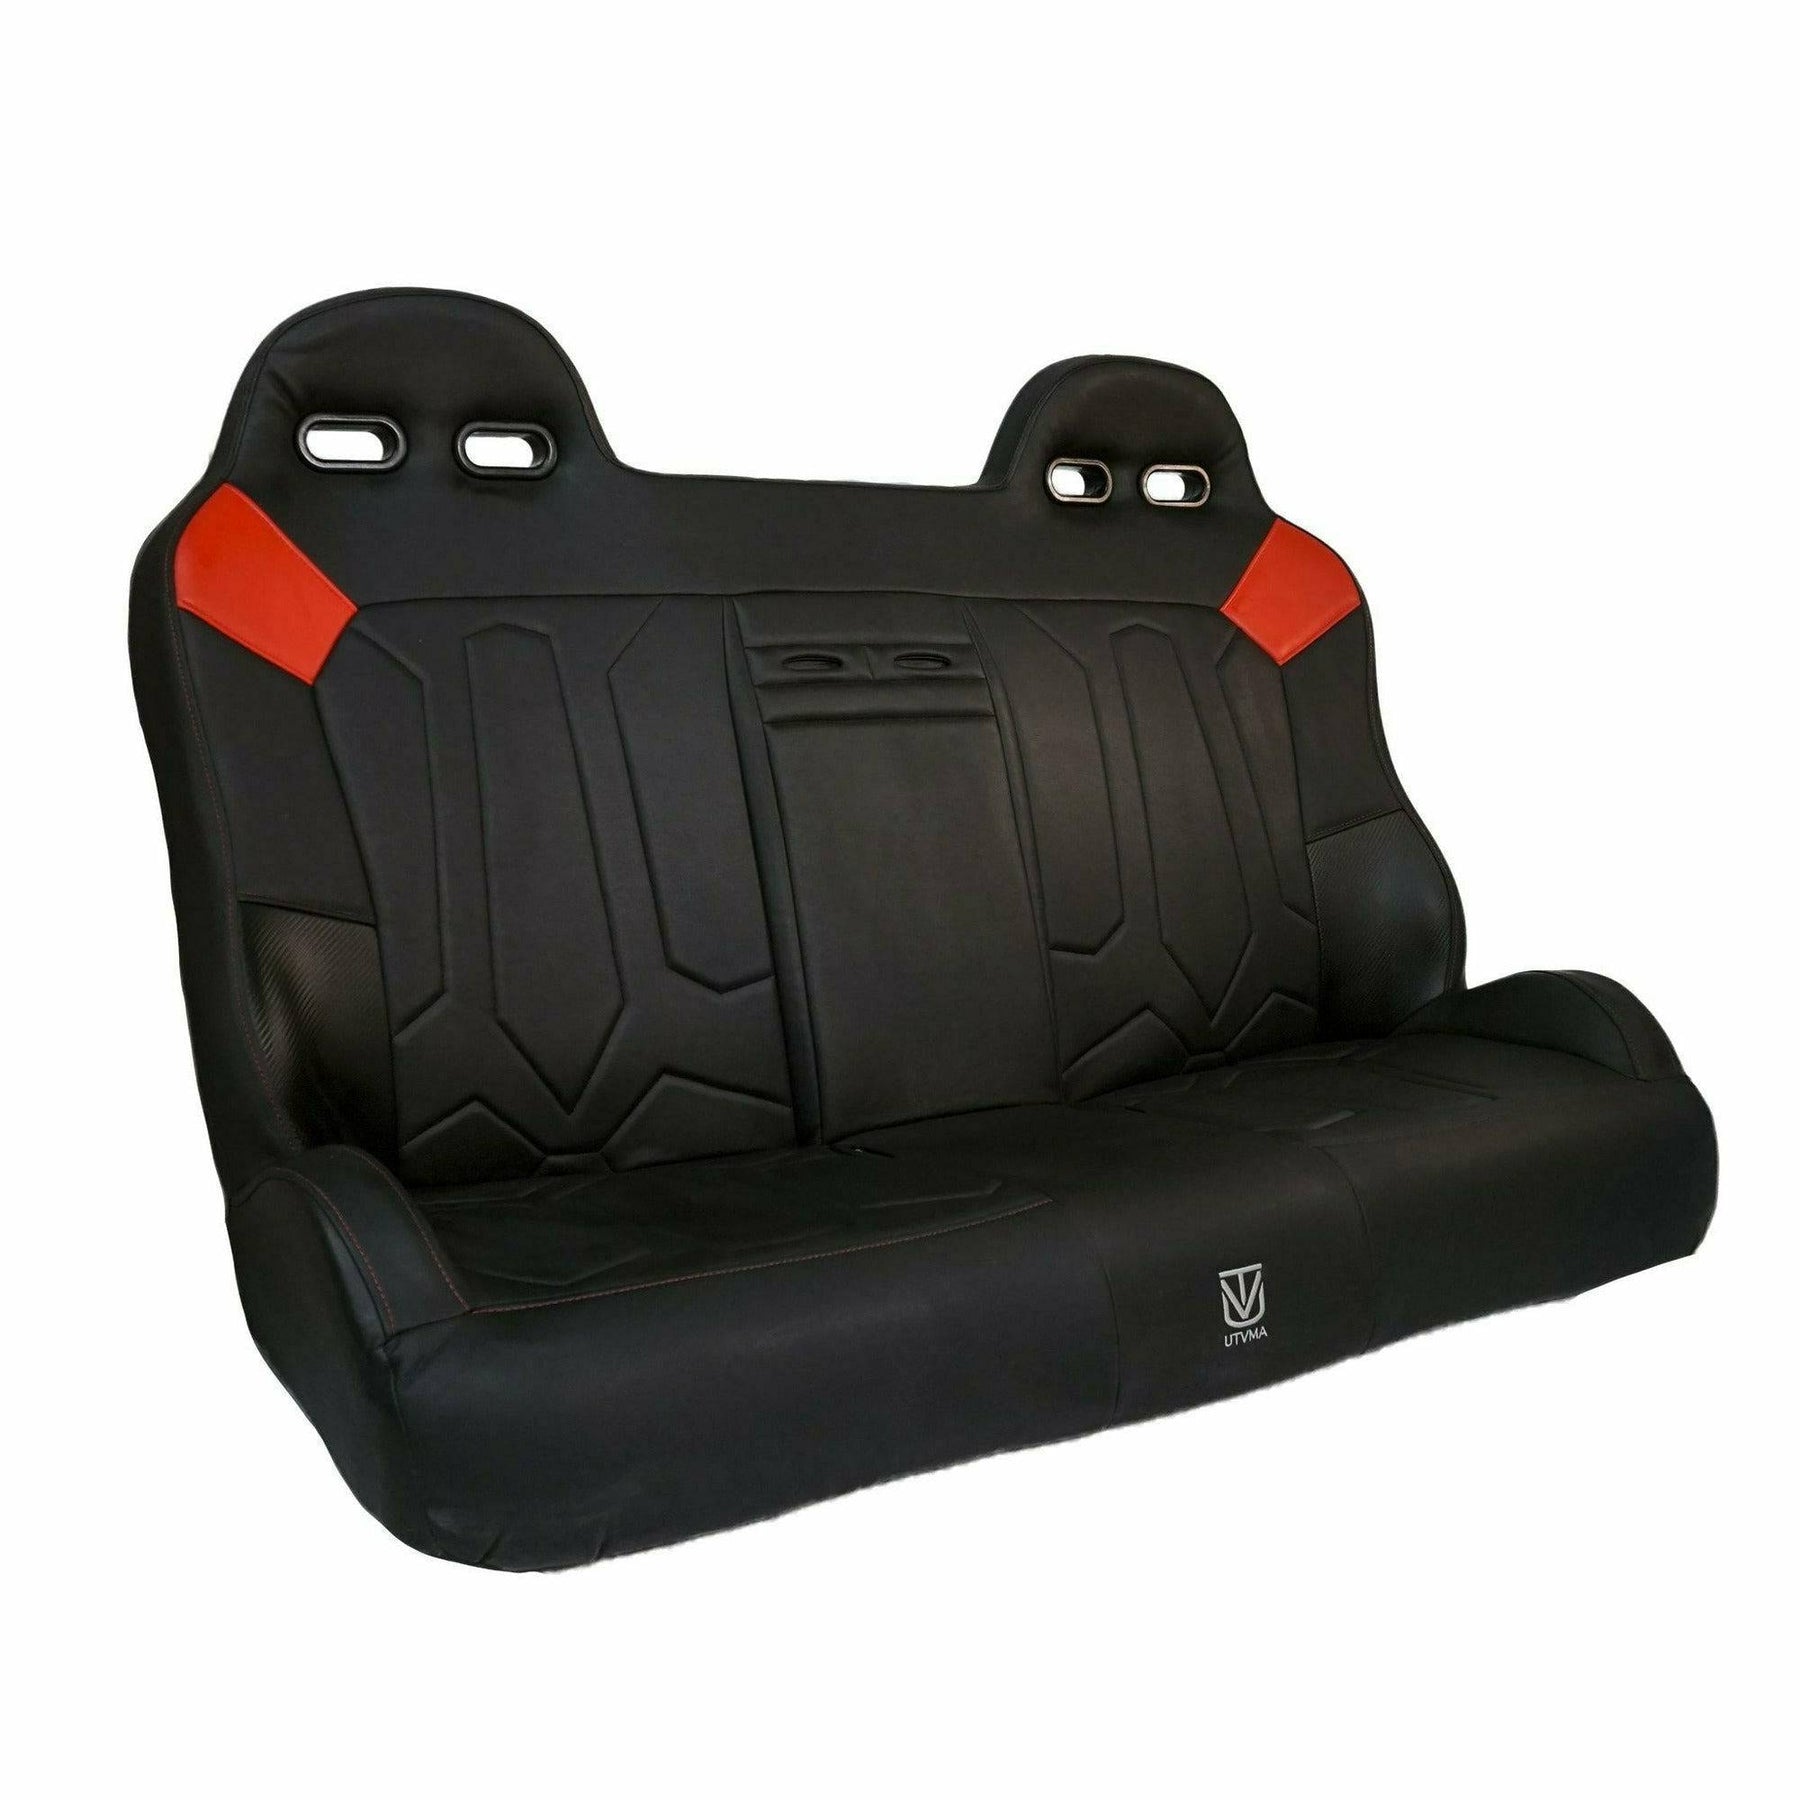 UTV Mountain Accessories Polaris General (4-Seat) Rear Bench Seat